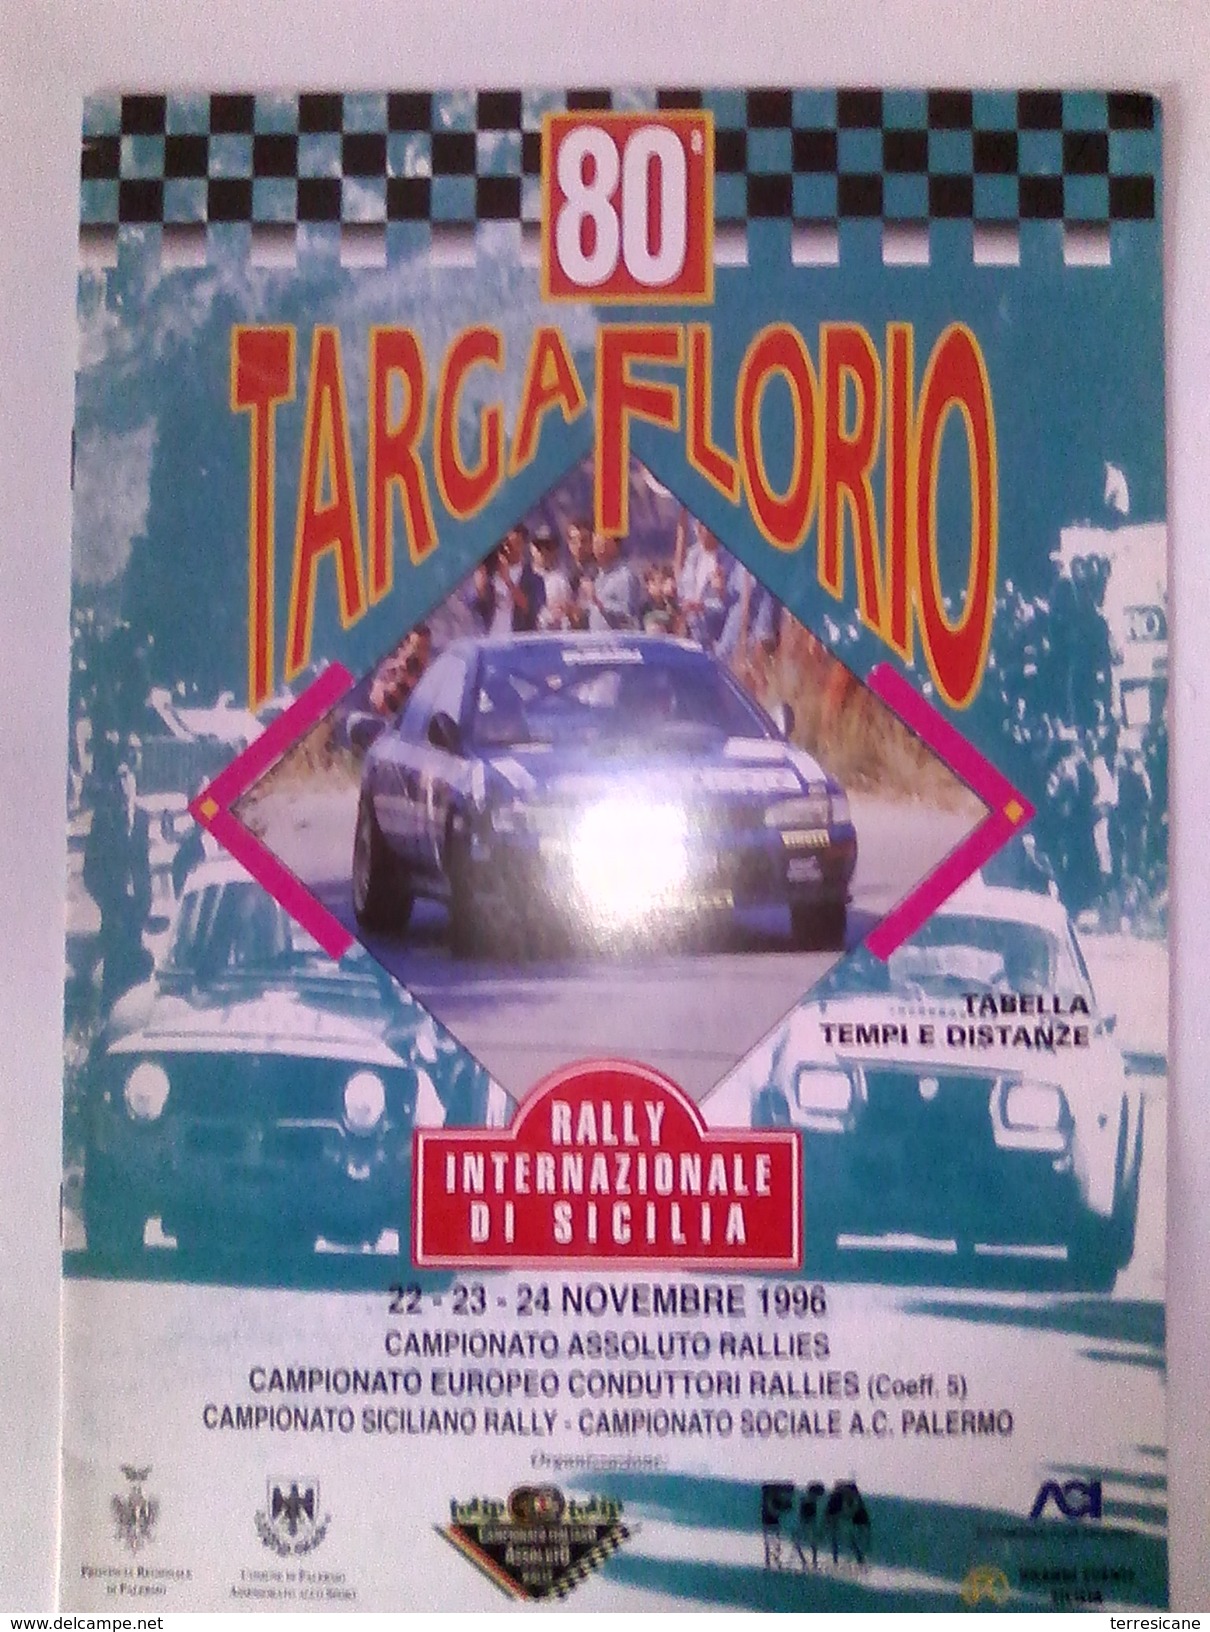 X 80 TARGA FLORIO 96 RALLY INTERNAZIONALE TABELLA TEMPI DISTANZE CARTINE 12 PAG - Automobilismo - F1